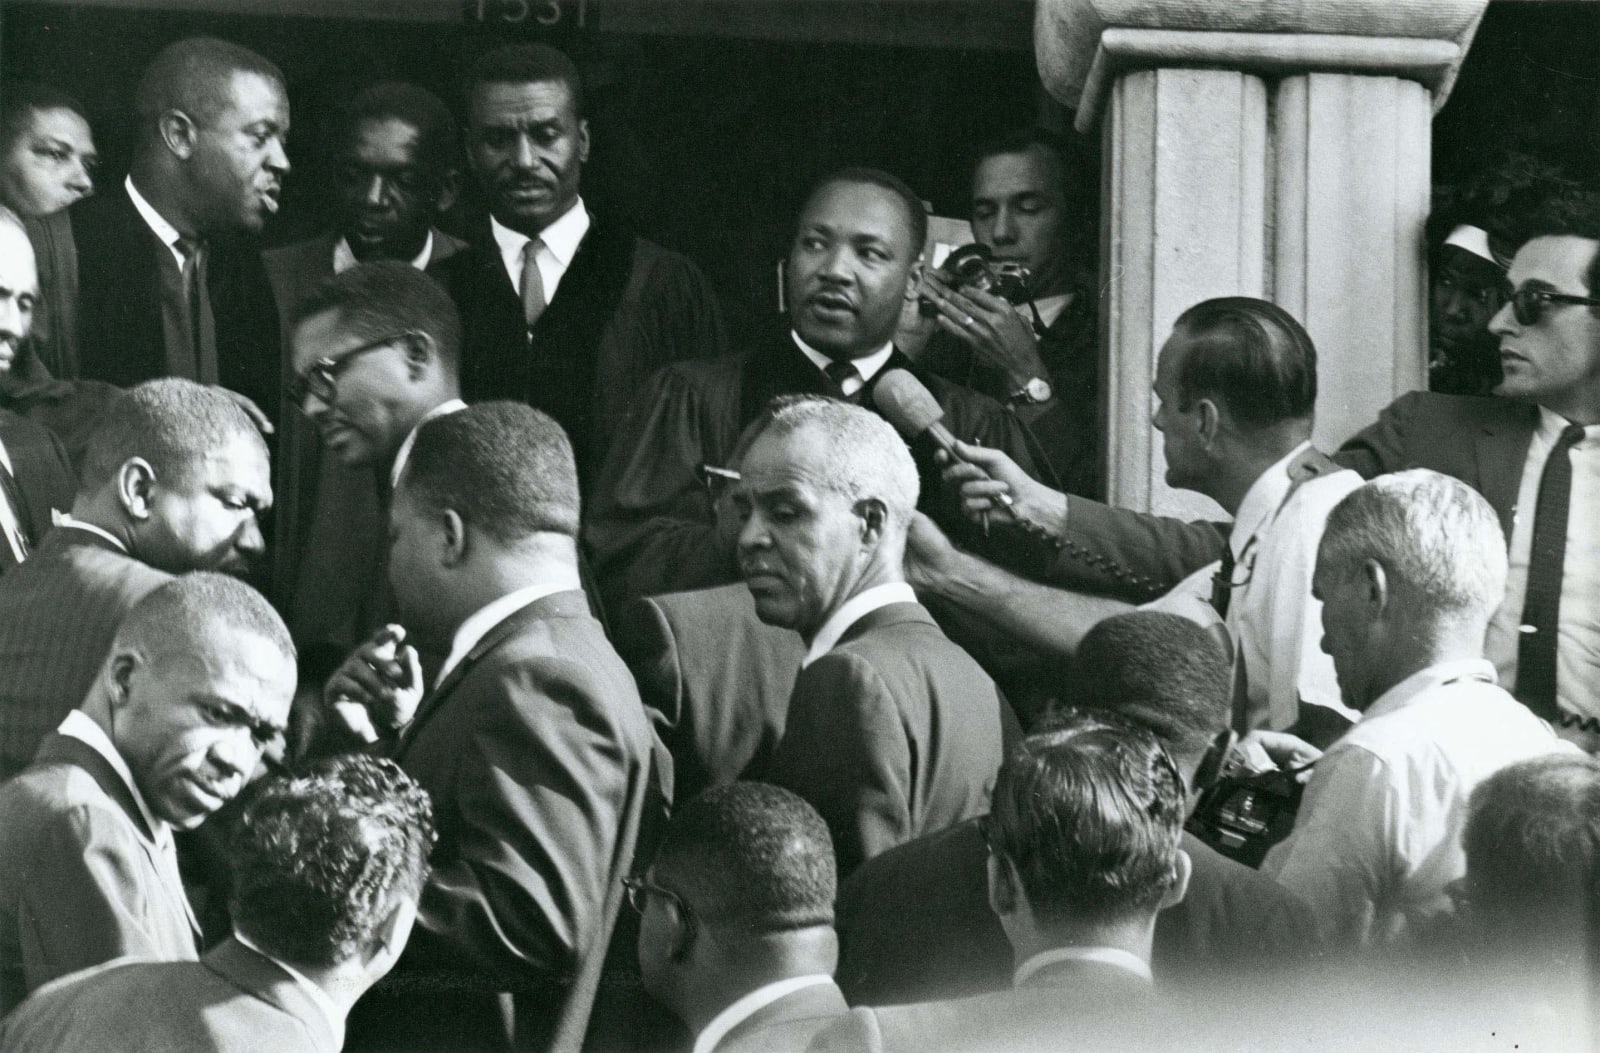 Danny Lyon, Abernathy, Shuttlesworth (SCLC), King and Wilkinson (NAACP), 1963